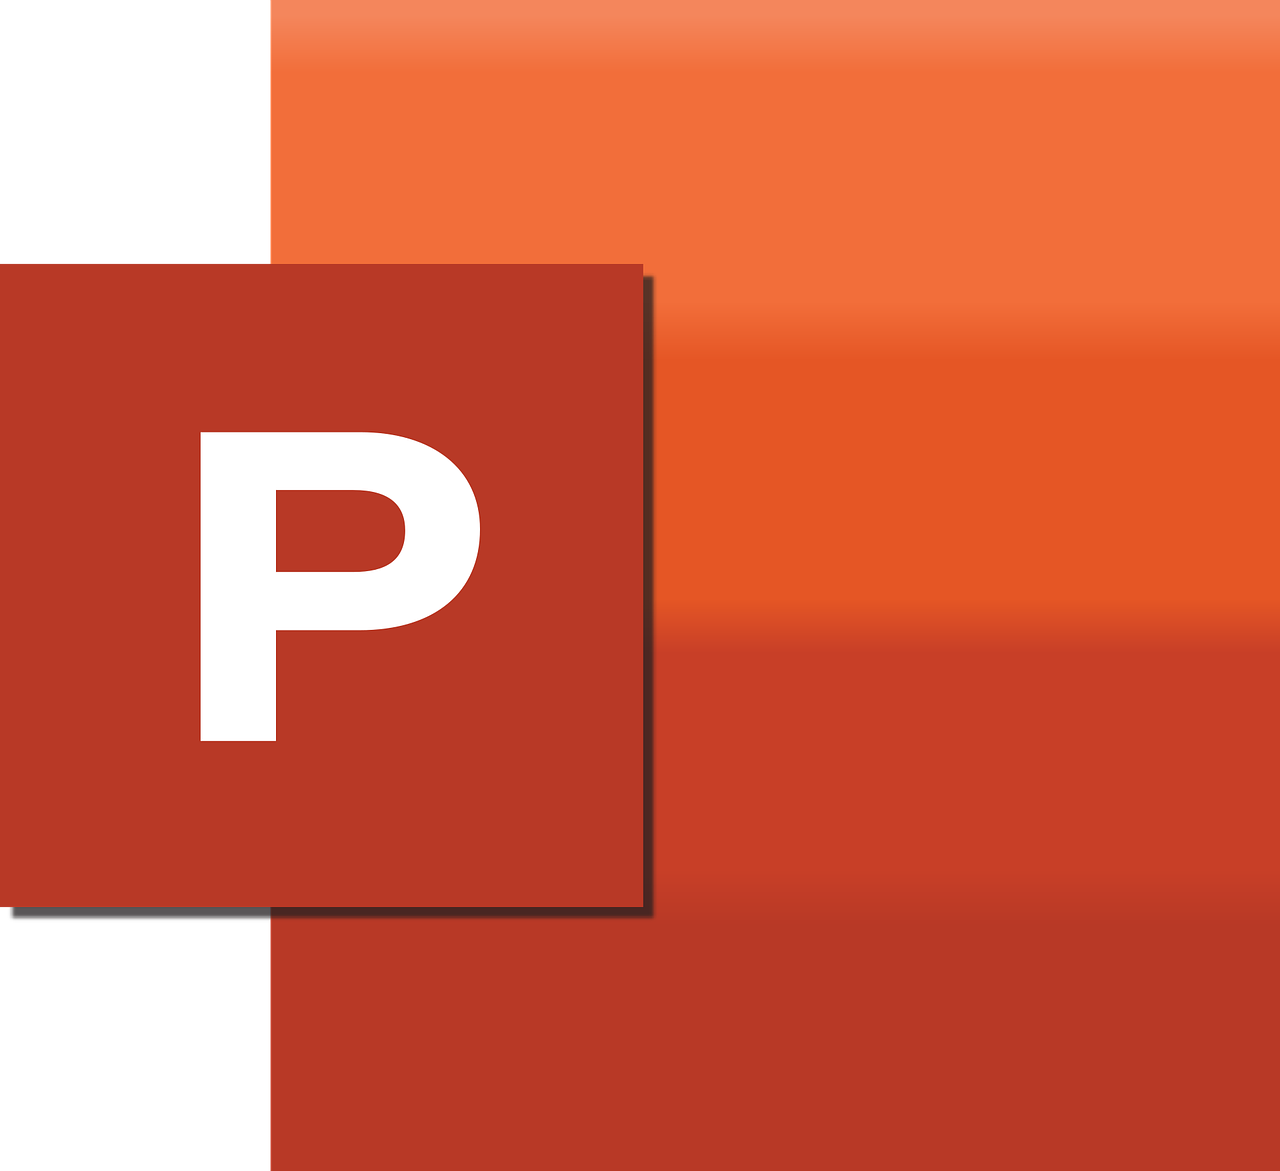 Поинт ютуб. Microsoft POWERPOINT. Логотип Пауэр поинт. MS POWERPOINT логотип. Значок POWERPOINT 2019.